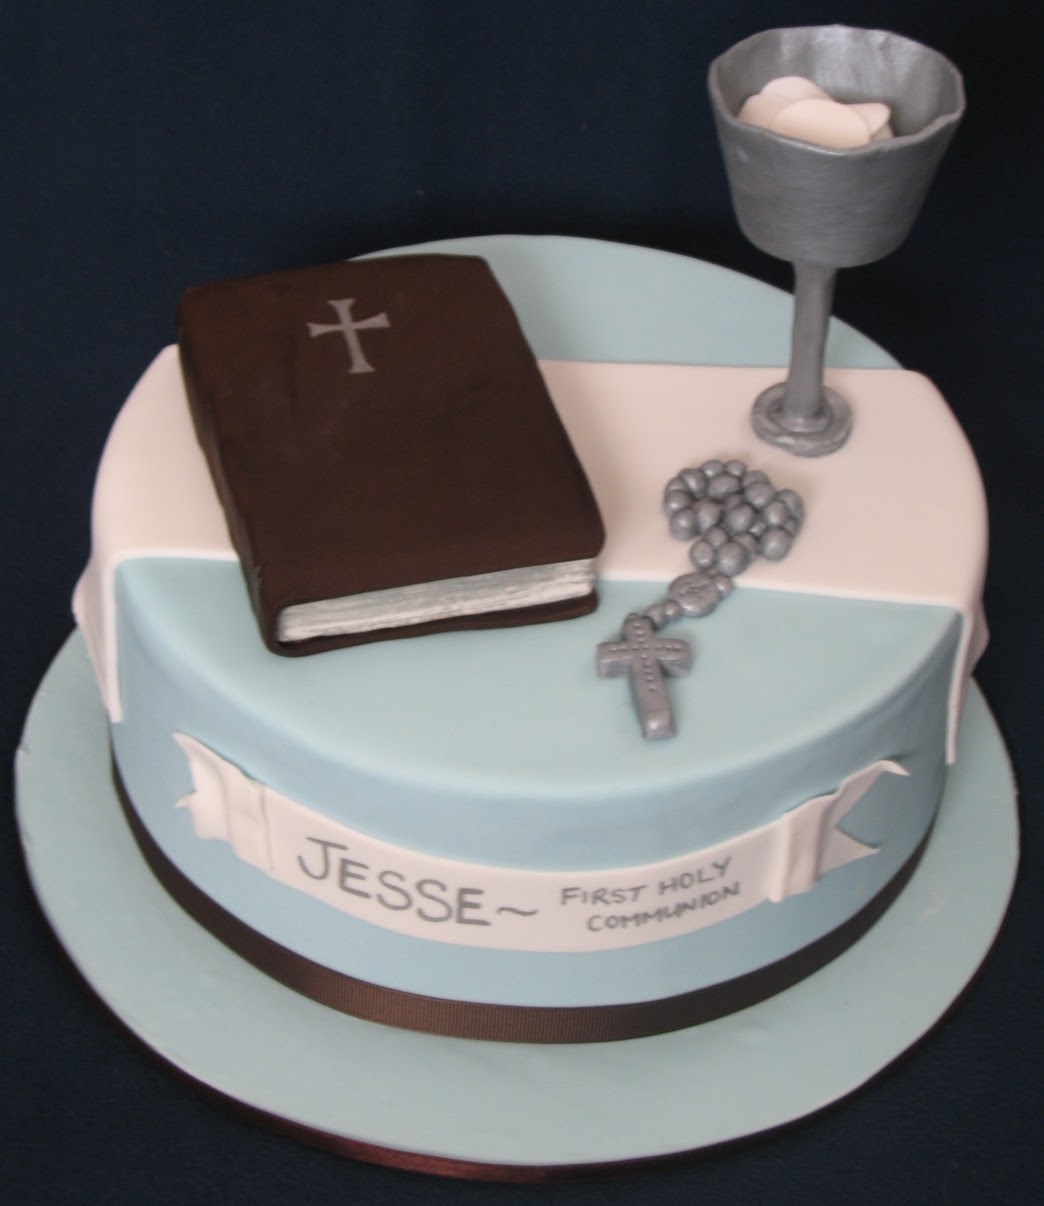 First Communion Cakes - Decoration Ideas | Little Birthday ...